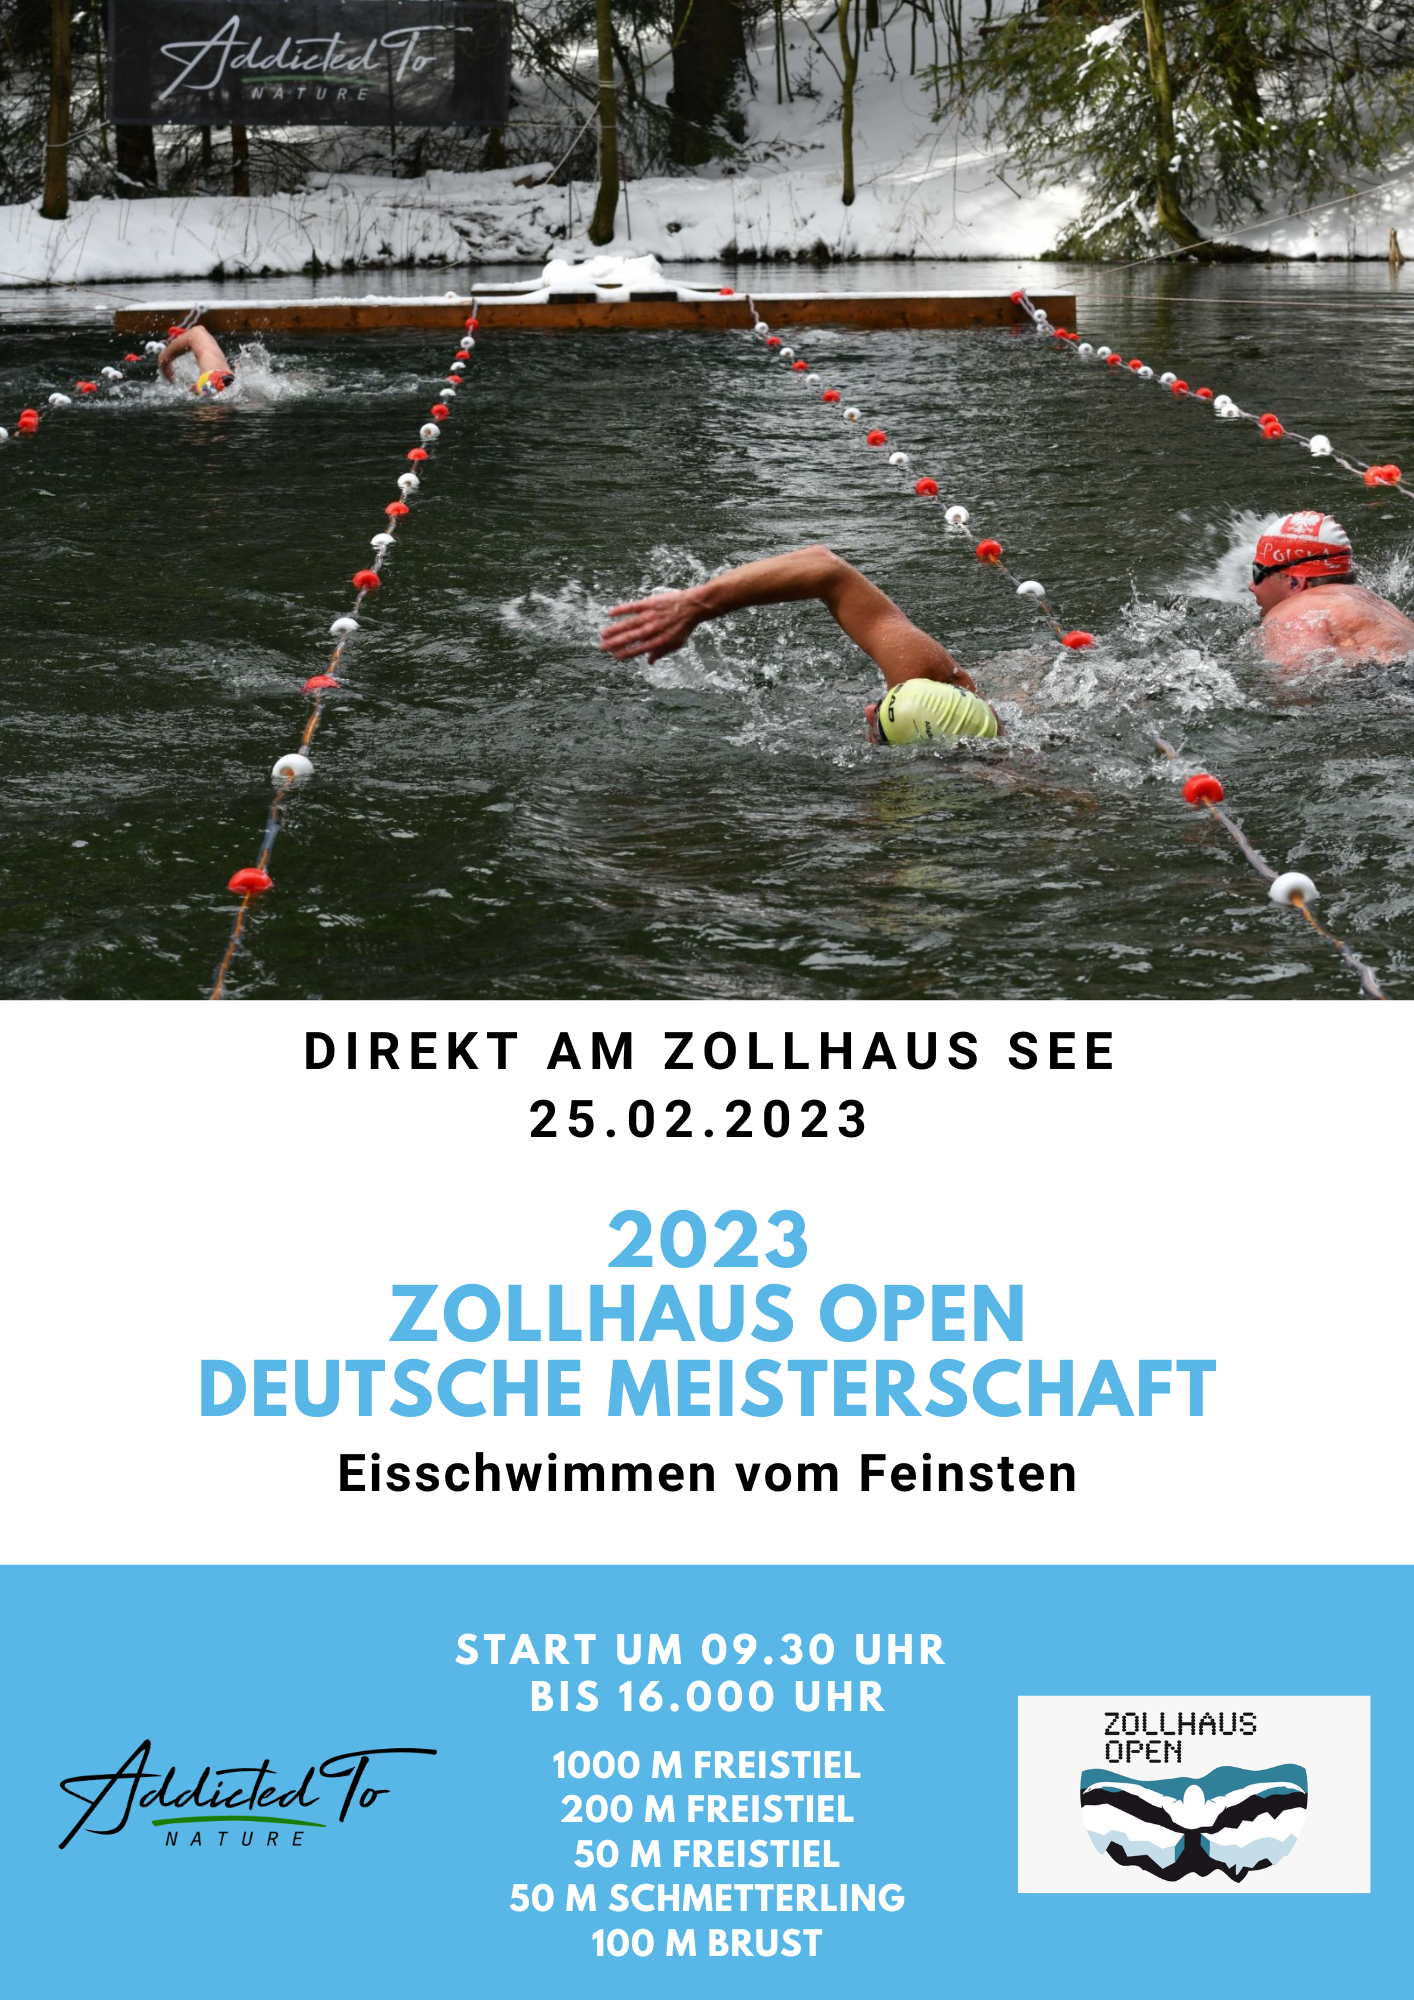 2023 Zollhaus open Deutsche Meisterschaft